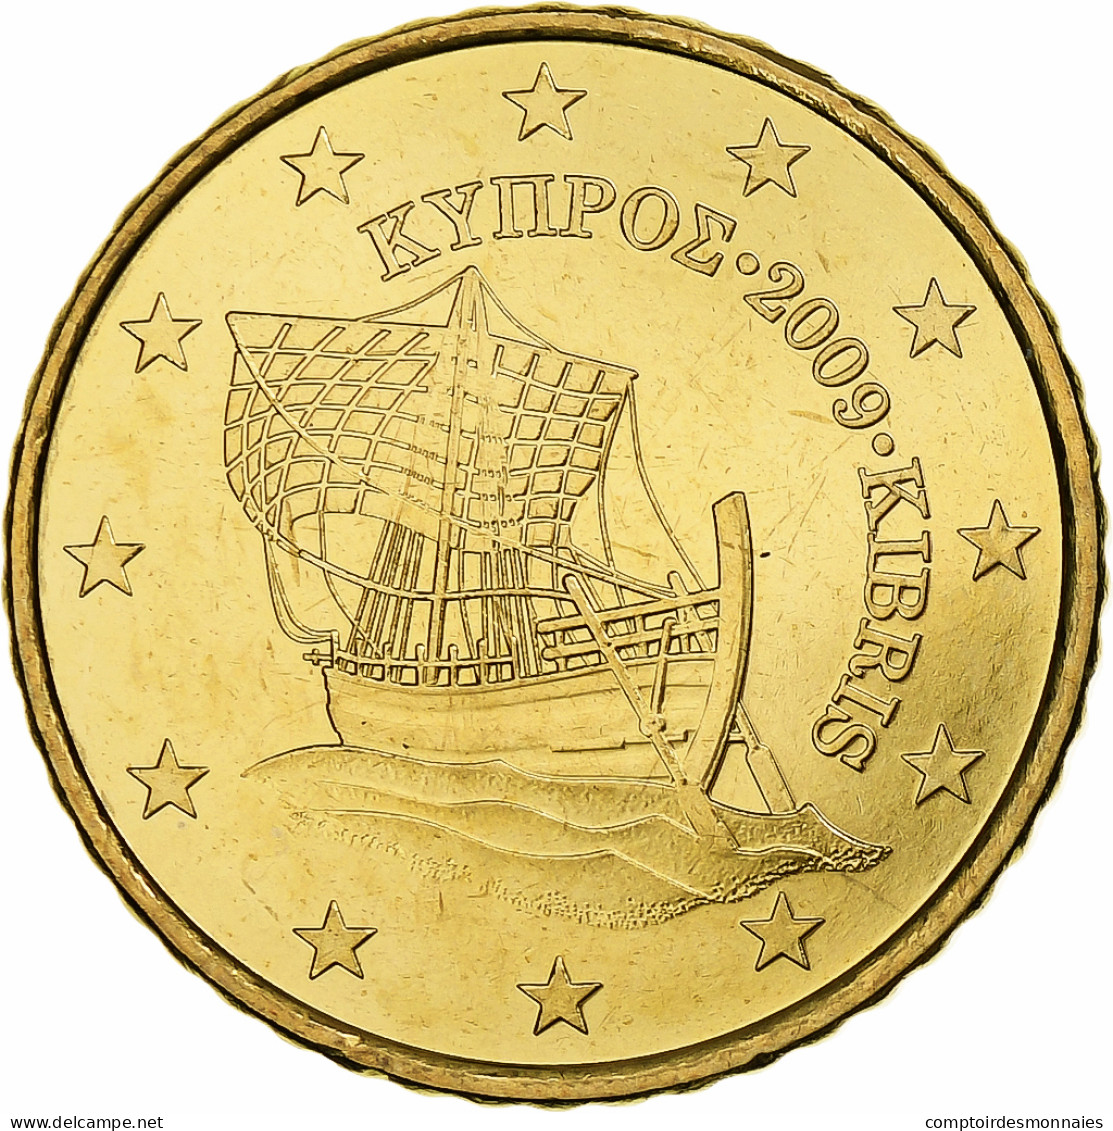 Chypre, 50 Euro Cent, 2009, Laiton, FDC, KM:83 - Cyprus